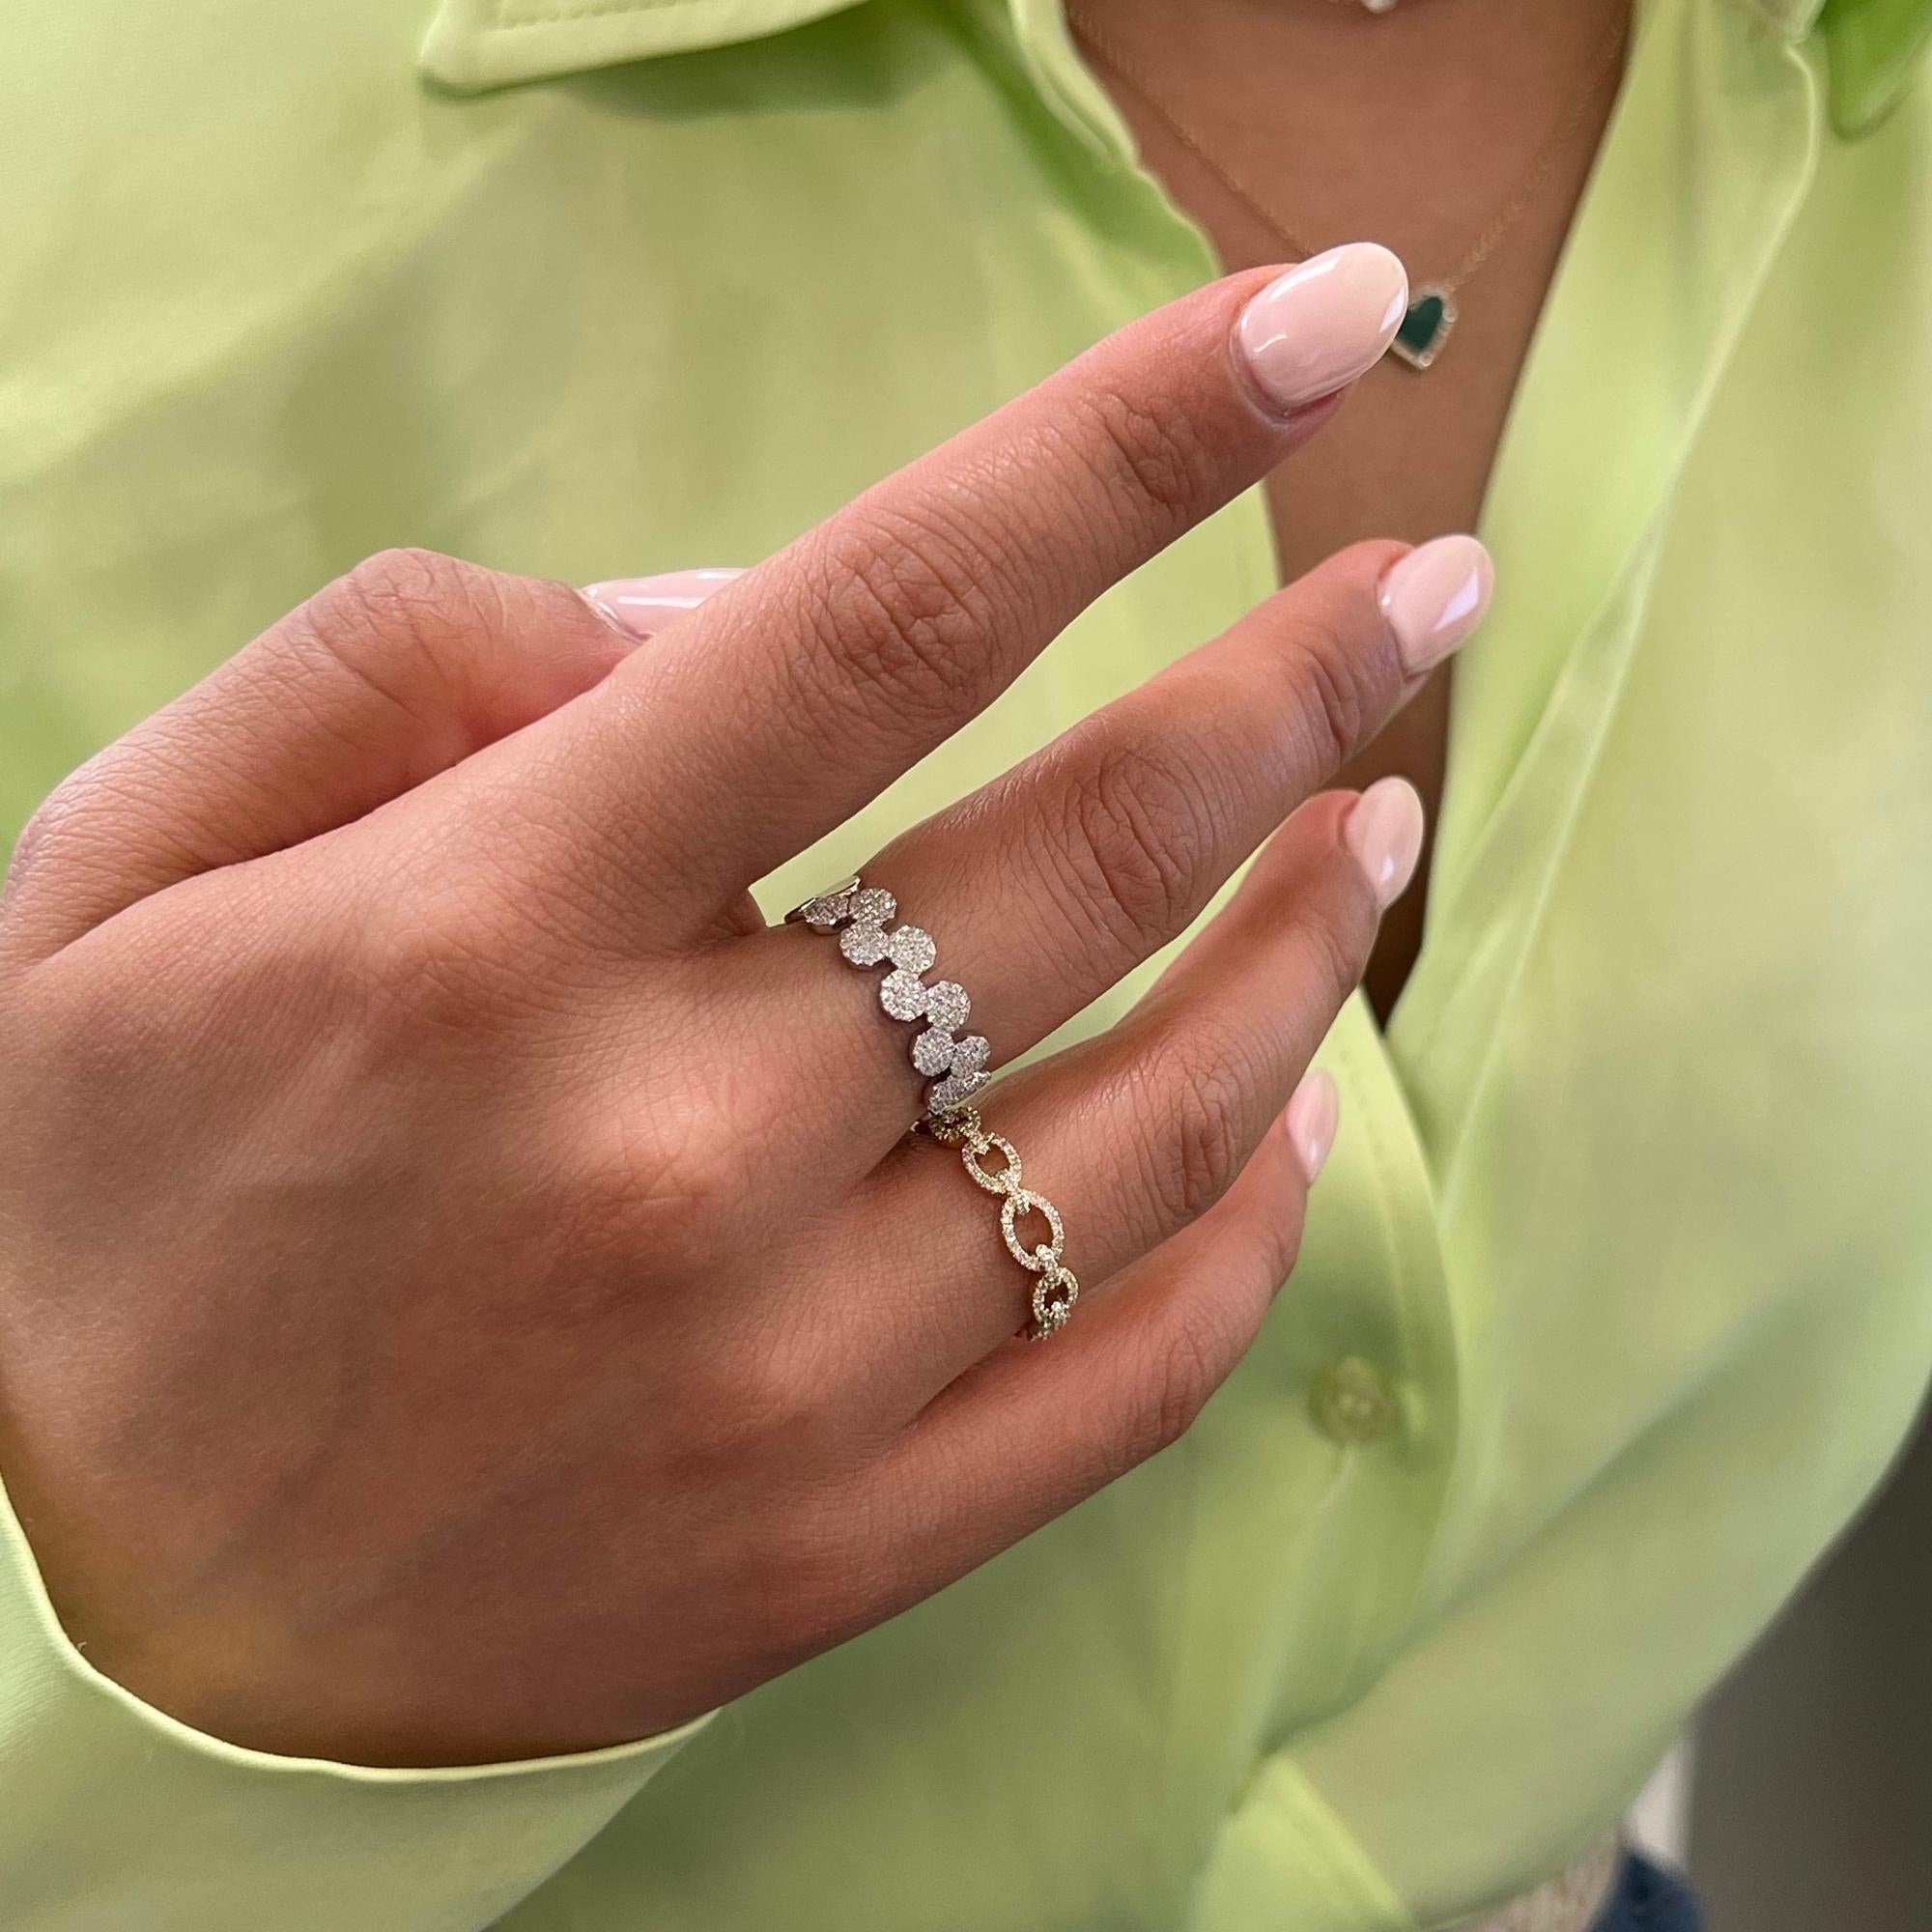 Rachel Koen Pave Round Cut Diamond Ring 14K White Gold 0.33Cttw For Sale 1